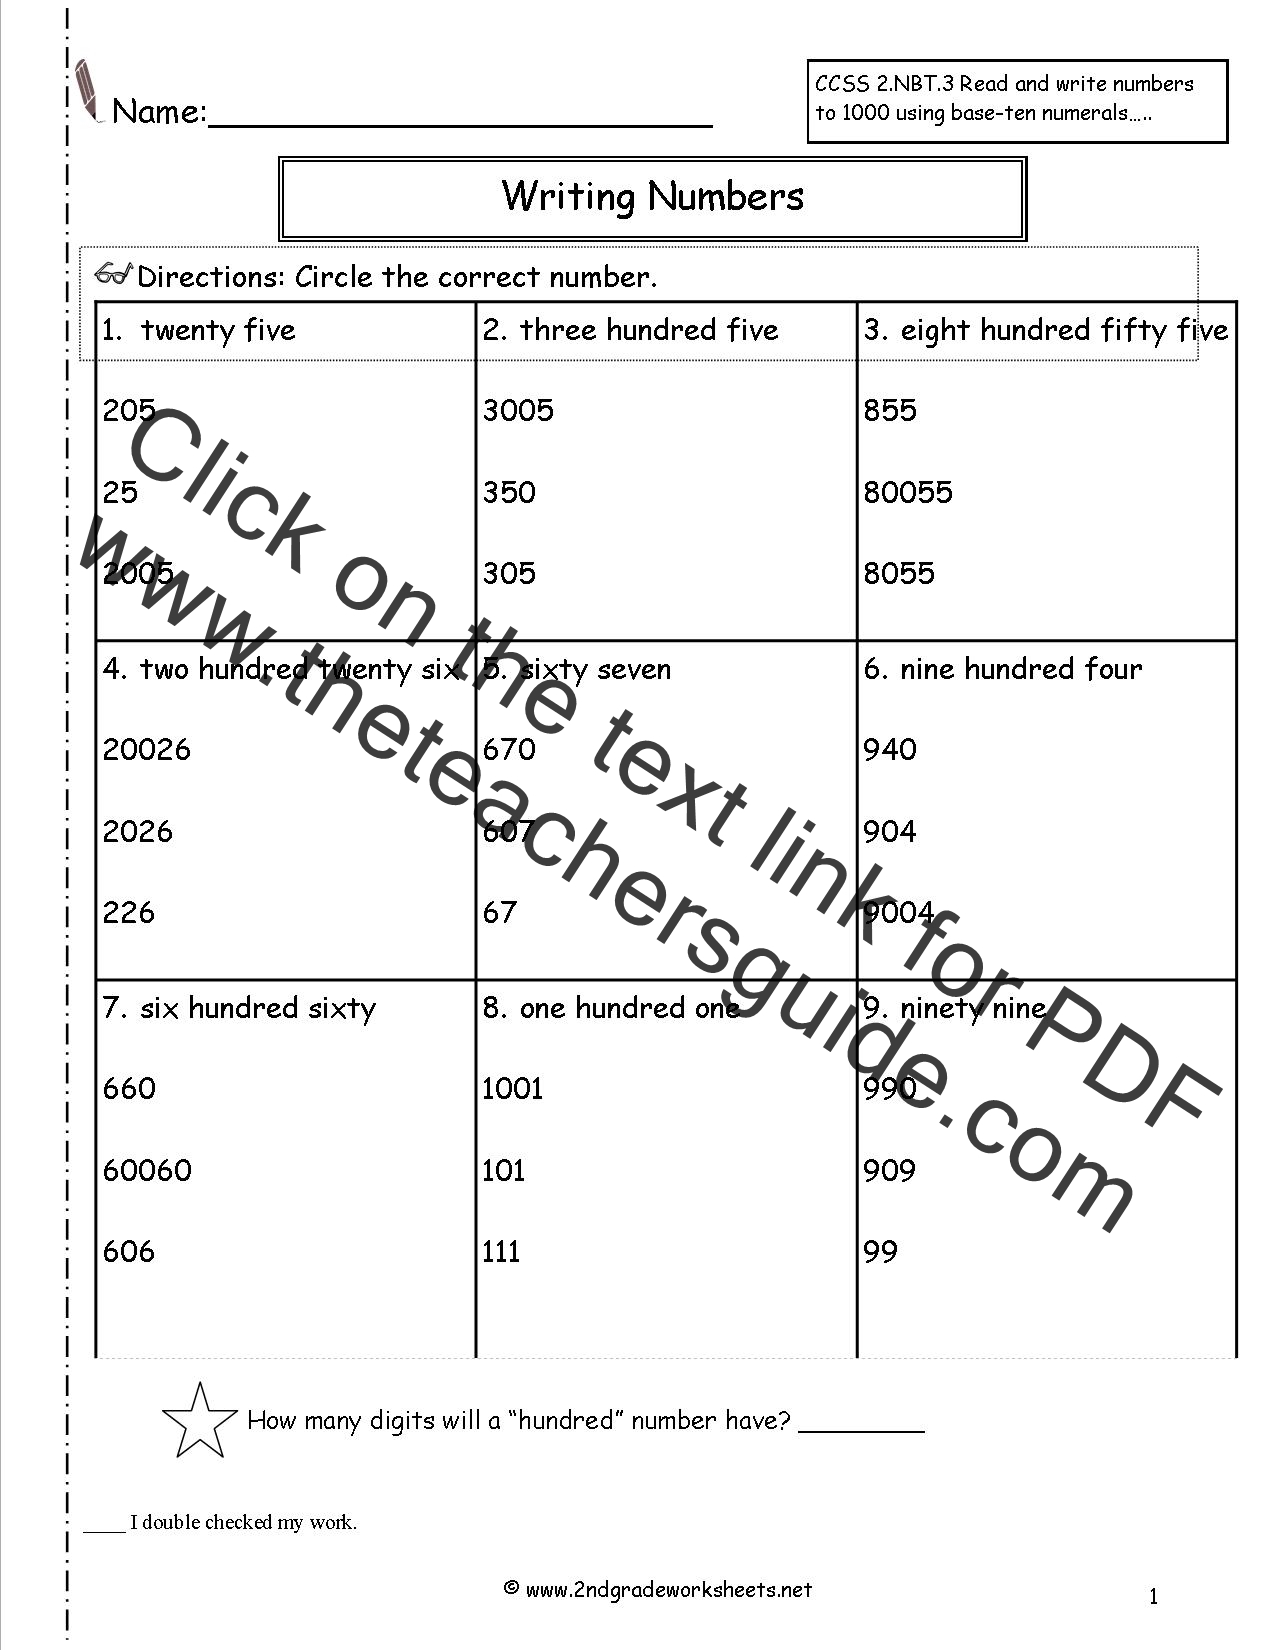 Reading And Writing Numbers Worksheet - Nidecmege